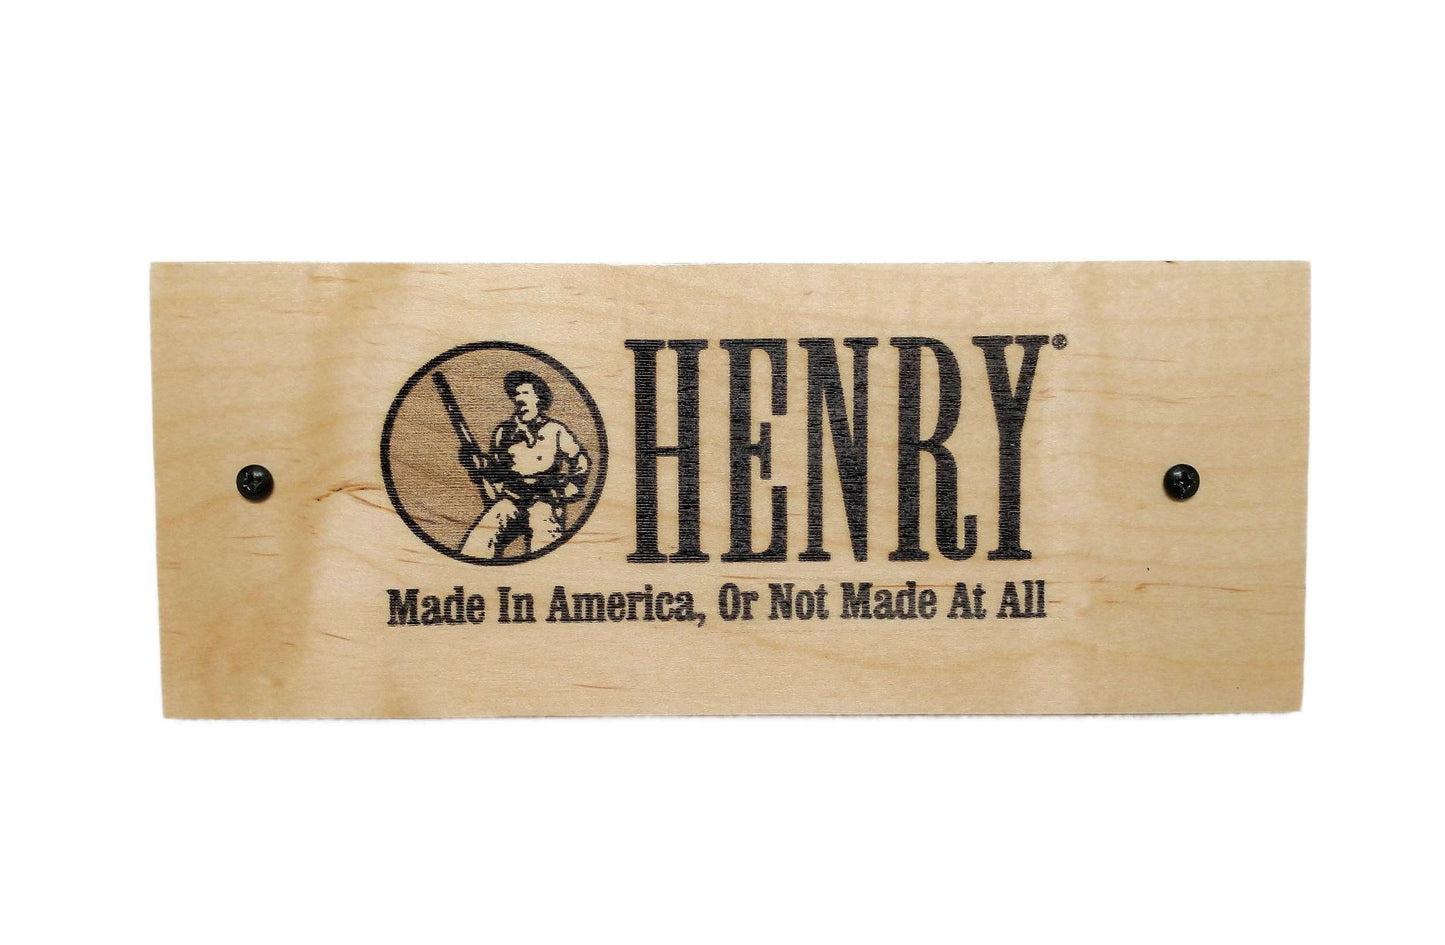 Walker Wood Gifts Novelties Rustic Maple Henry Gun Plaque, Laser Burned, Ranch Cowboy Decor Gift